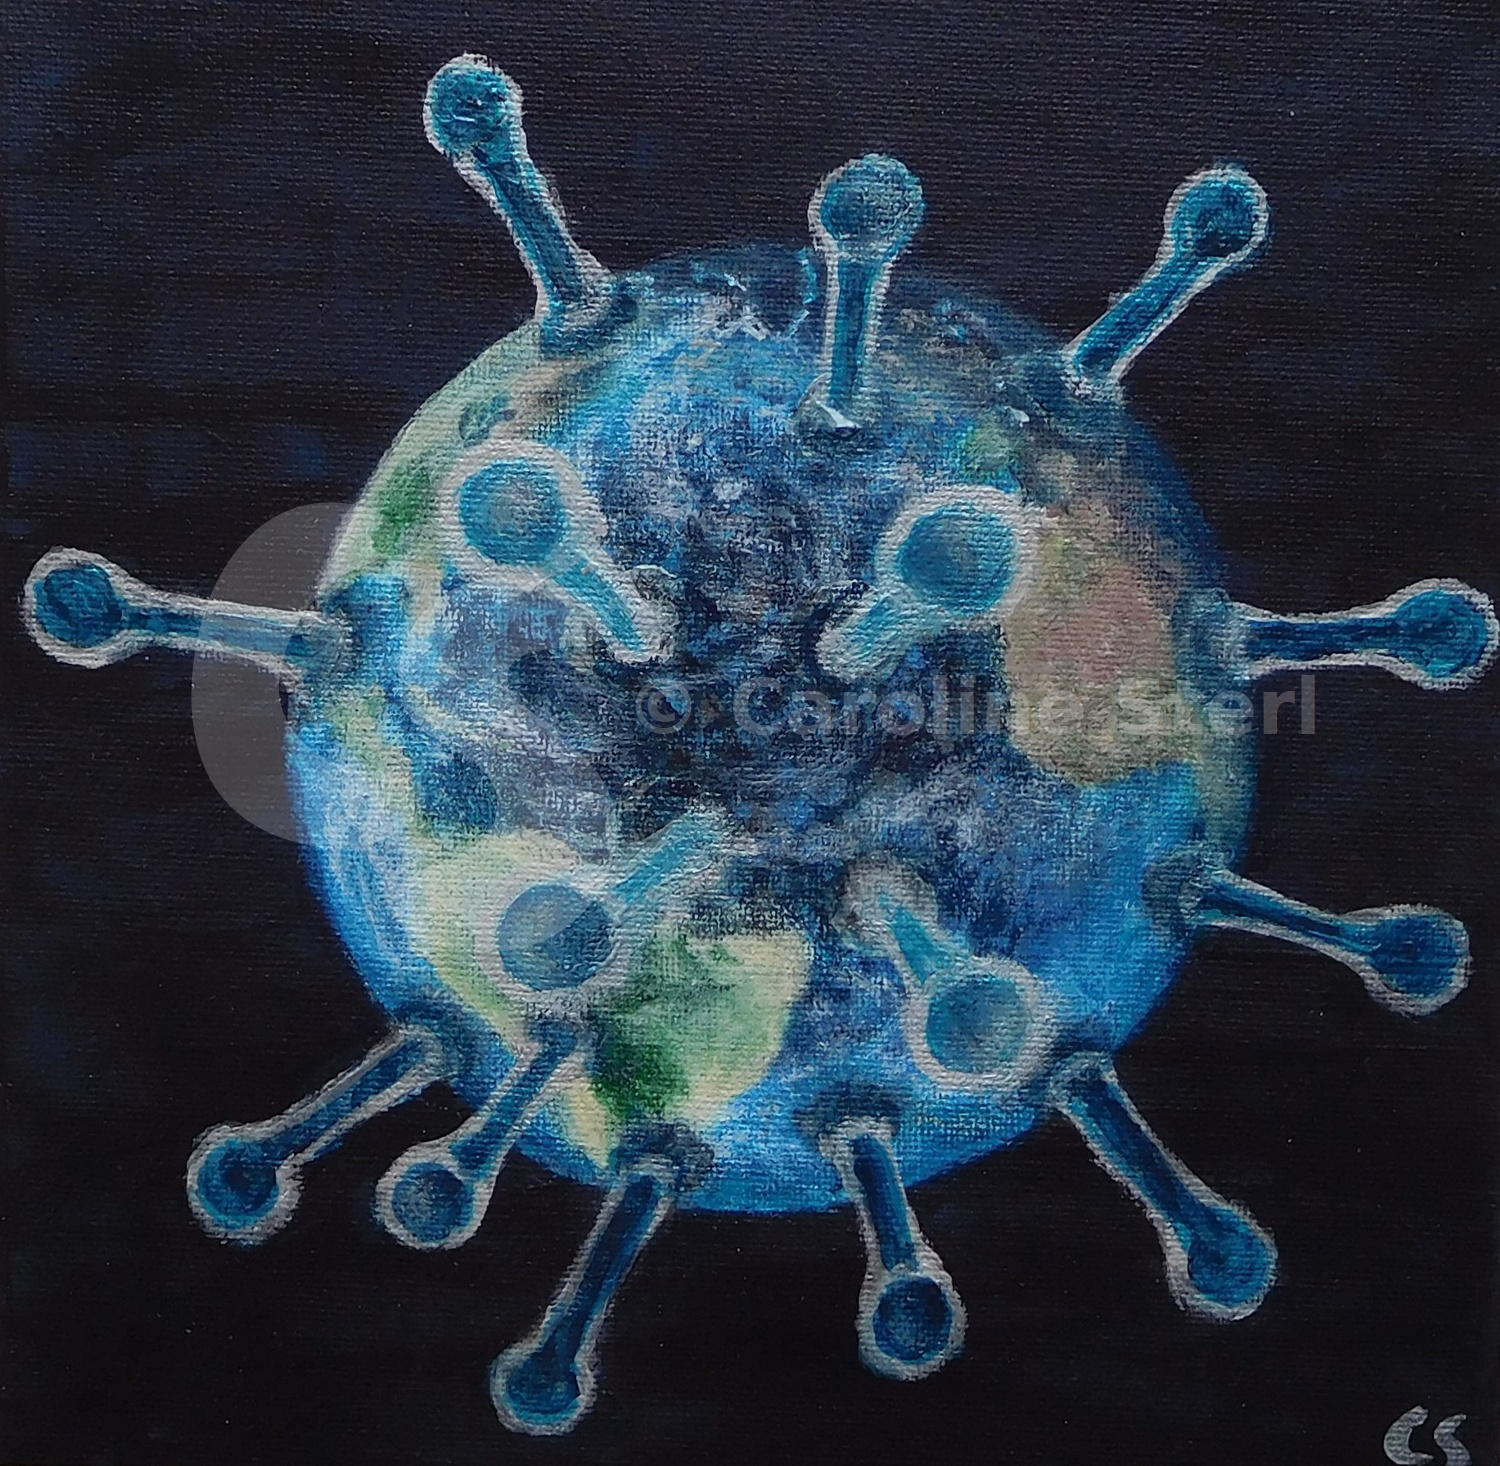 Painting: Pandemic